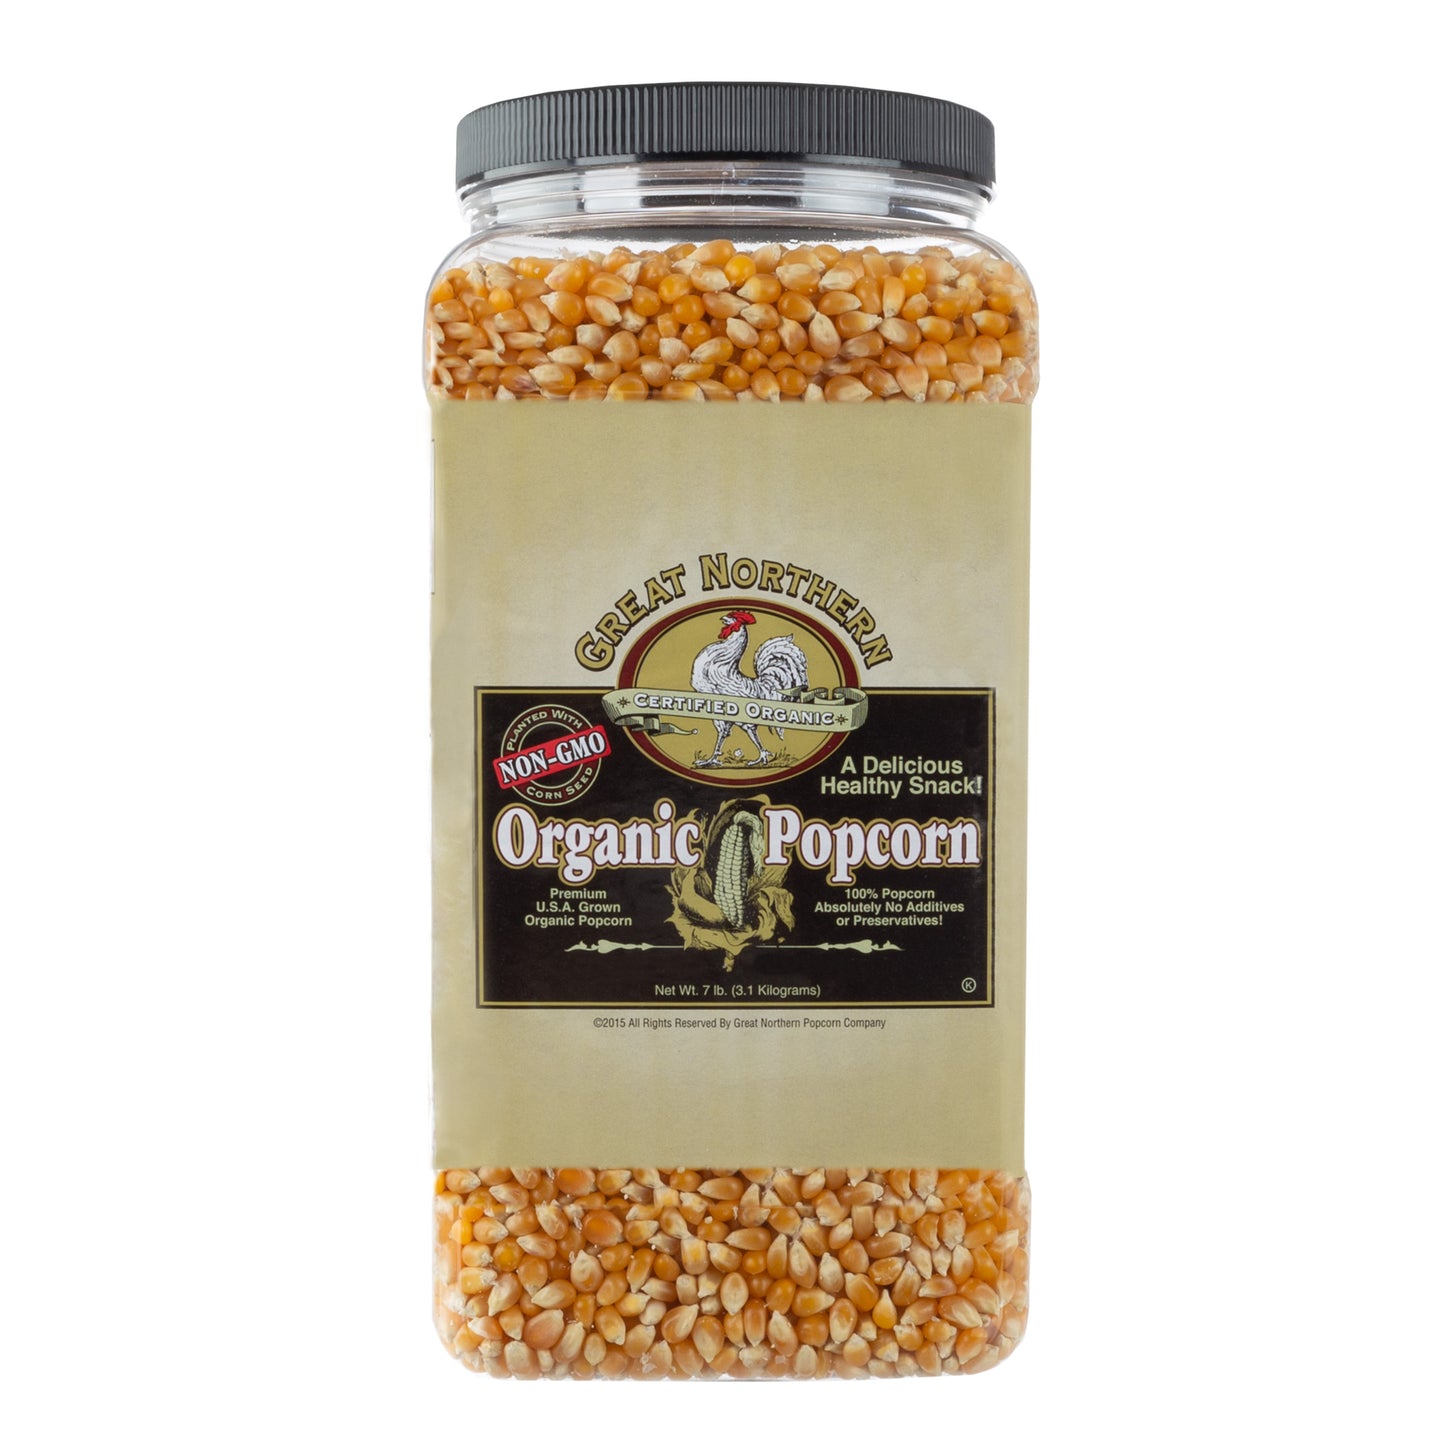 Organic Popcorn Kernels - 7 Pound Jug